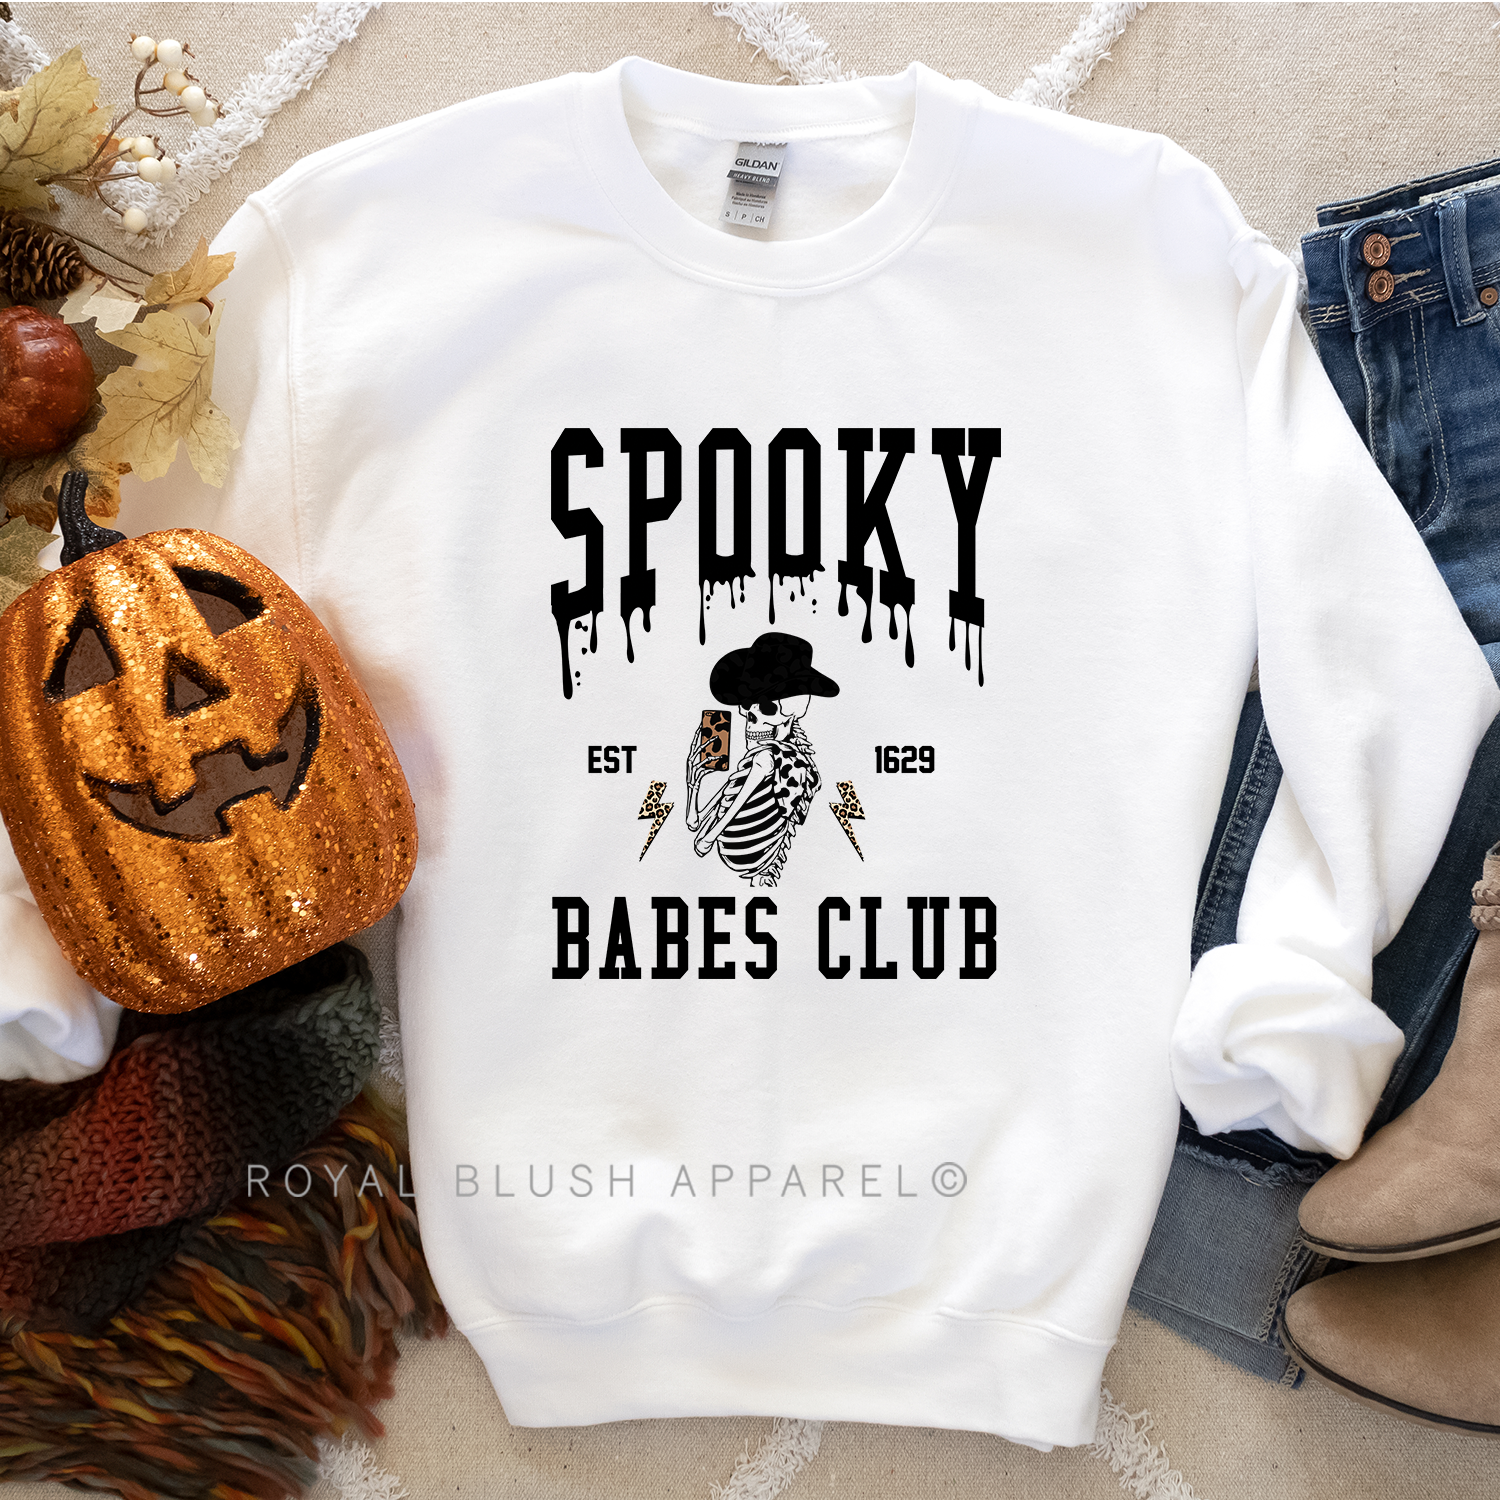 Spooky Babes Club Sweatshirt